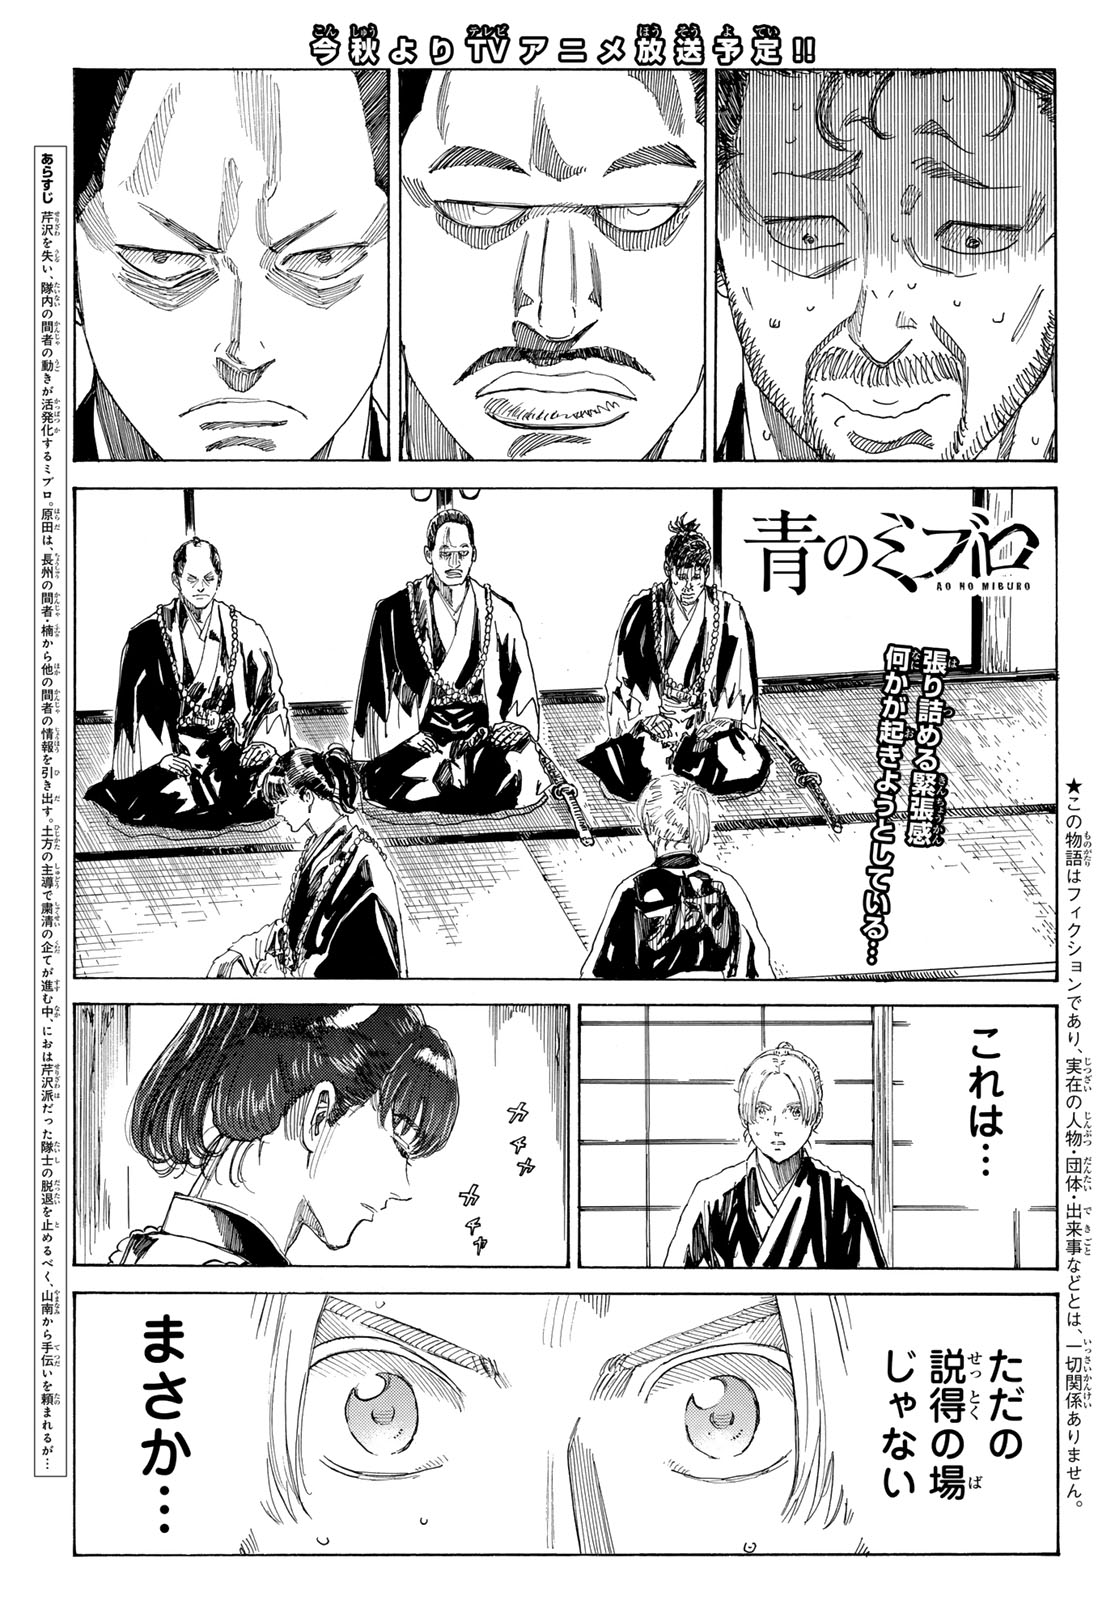 Ao no Miburo - Chapter 119 - Page 2